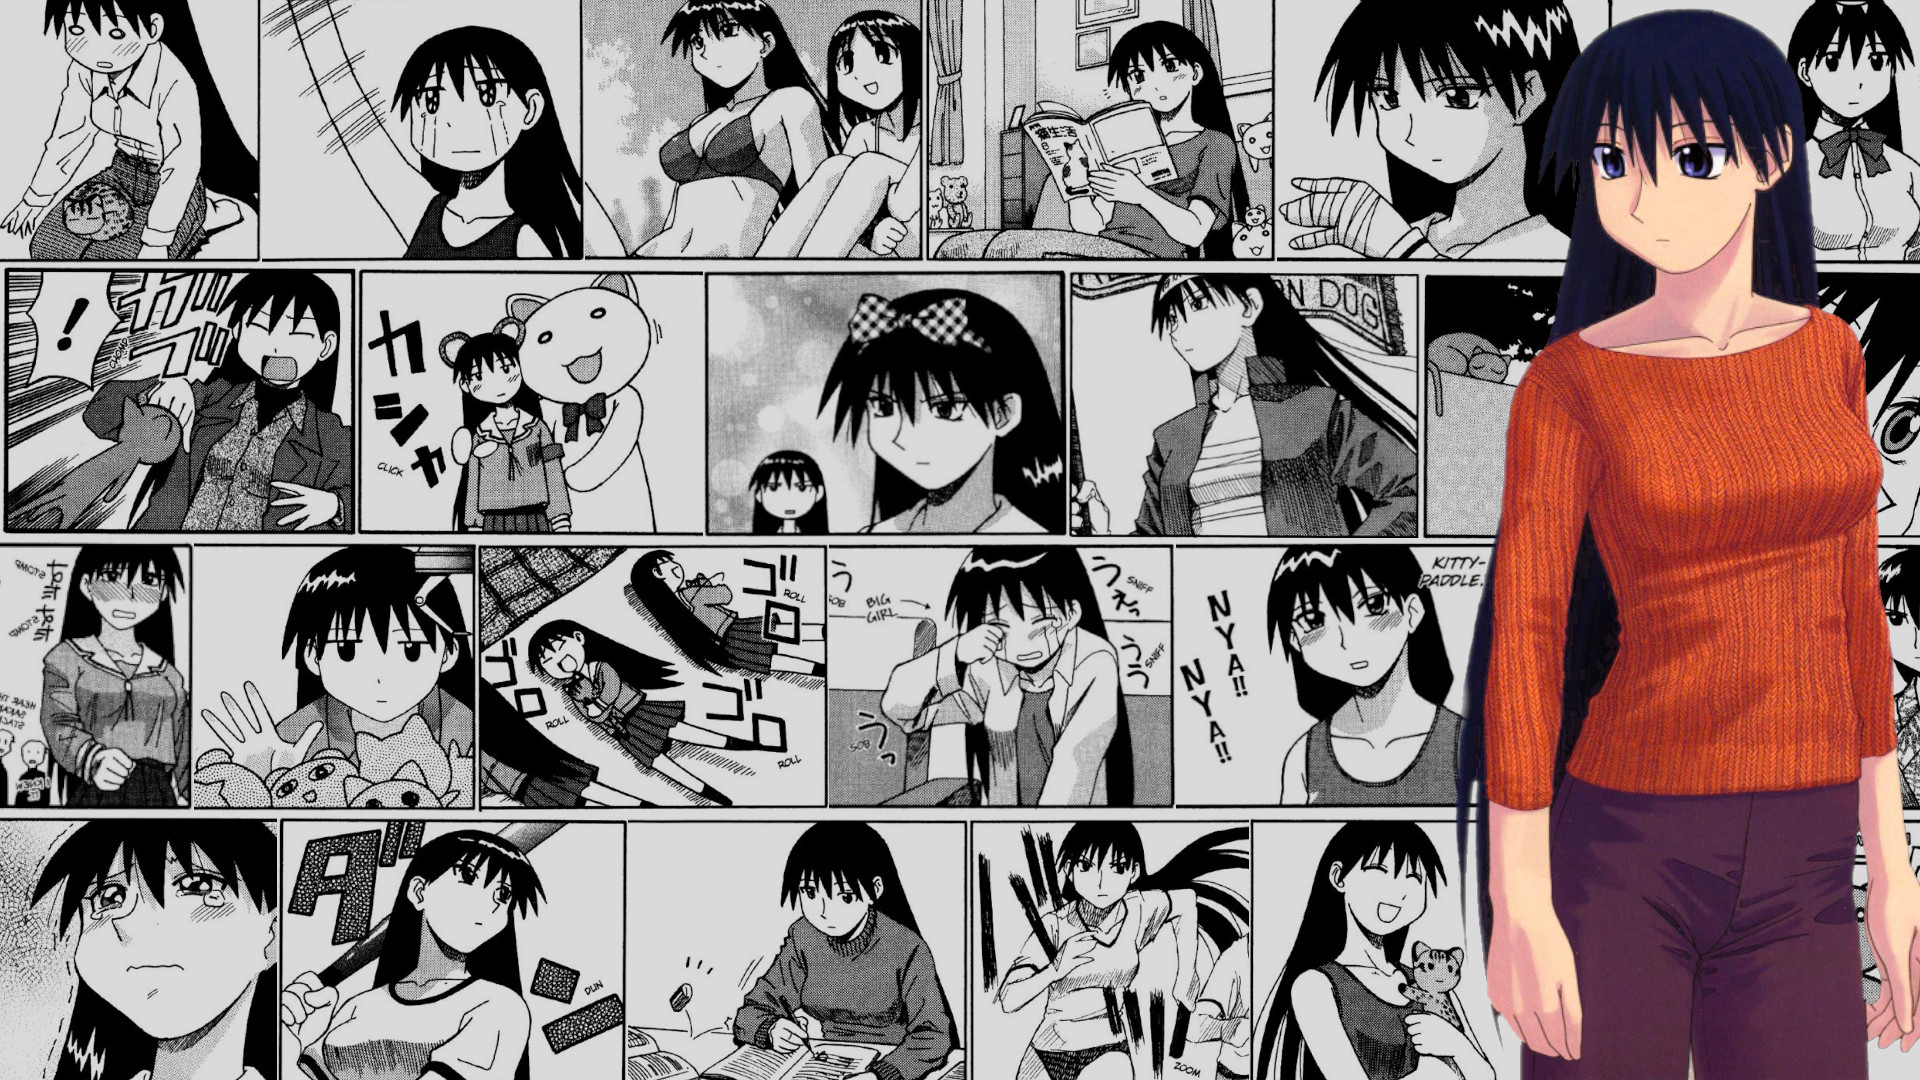 Sakaki manga collage by hasecilu